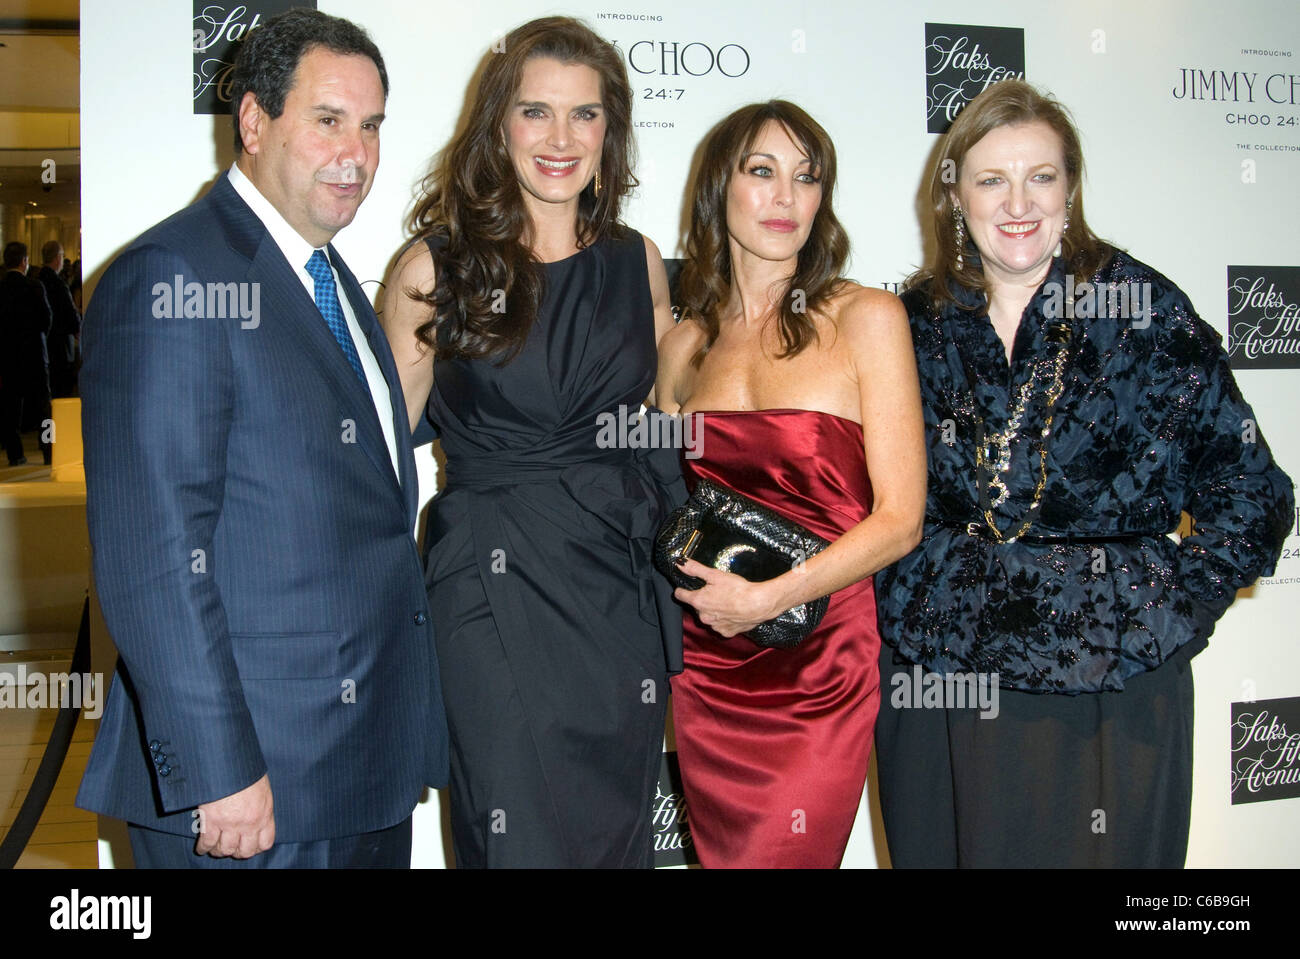 Brooke Shields, Steve Sadove, Tamara Mellon and Glenda Bailey at the launch of CHOO 24:7 at Saks Fifth Avenue New York City, Stock Photo